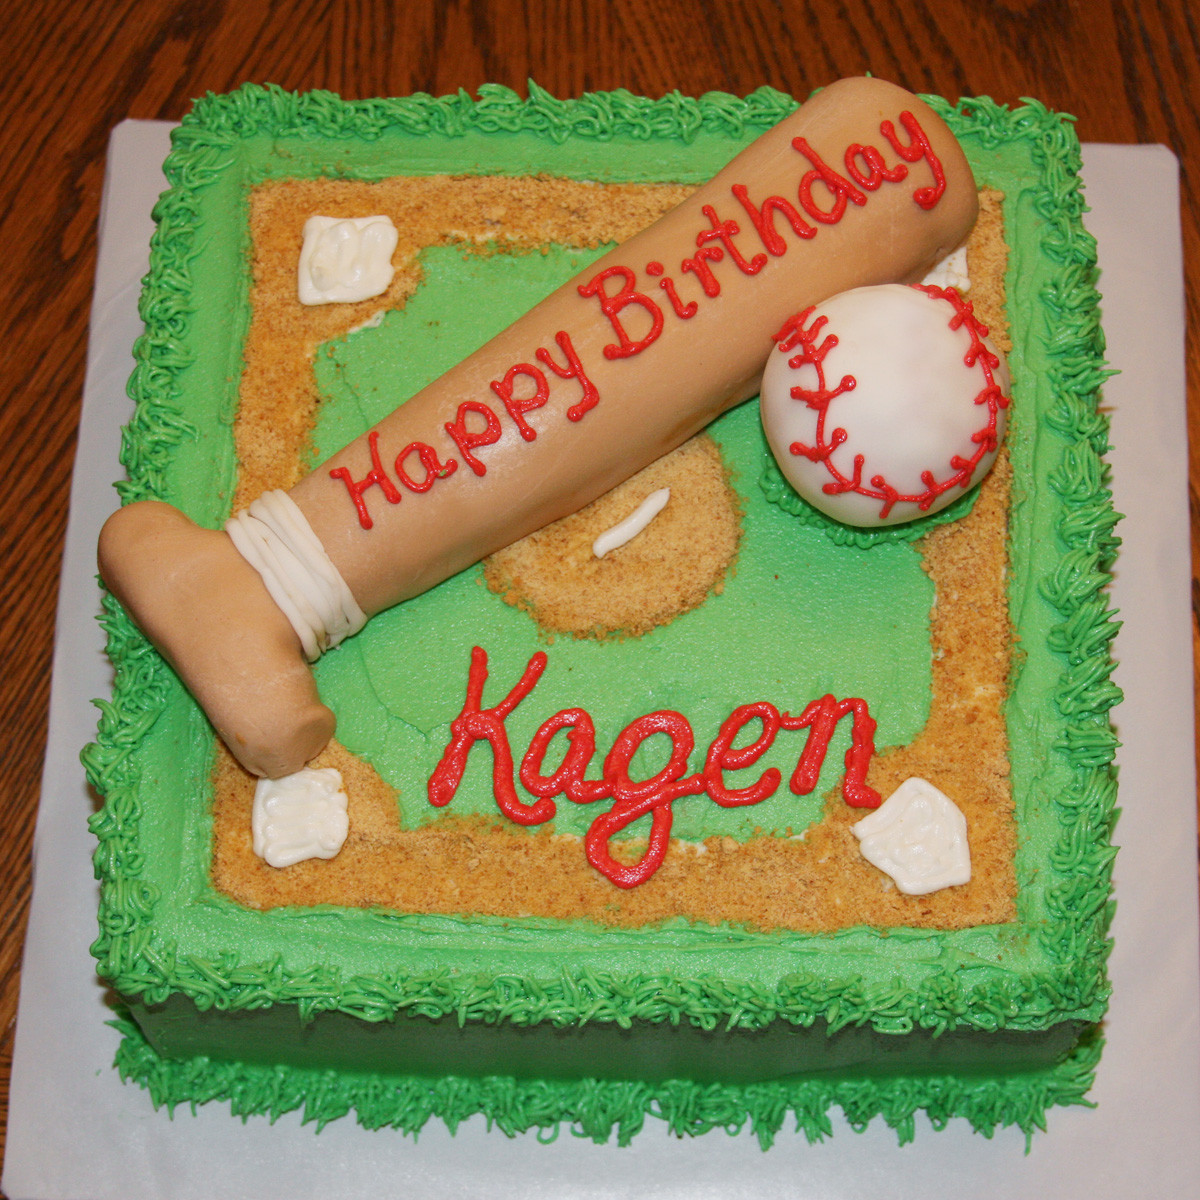 Best ideas about Baseball Birthday Cake
. Save or Pin Carla s Cakes Baseball Birthday Cake Now.